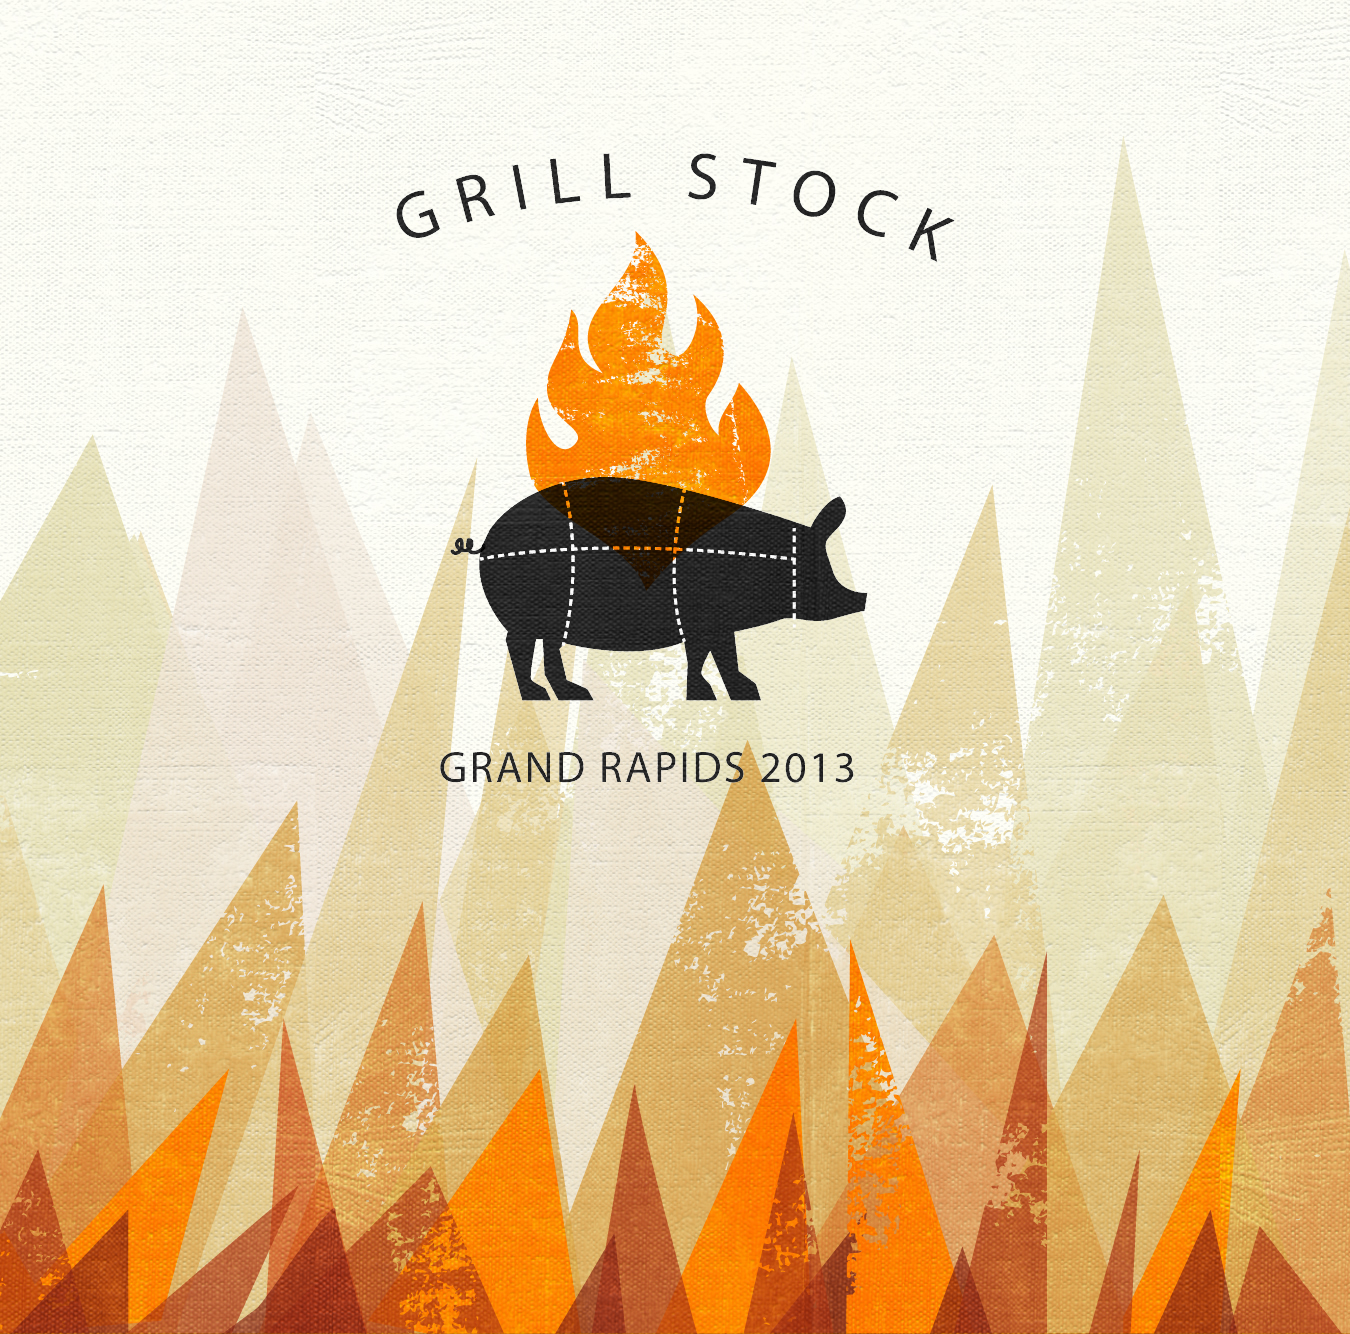 Grand Rapids Grill Stock logo designed by Xoil Design.